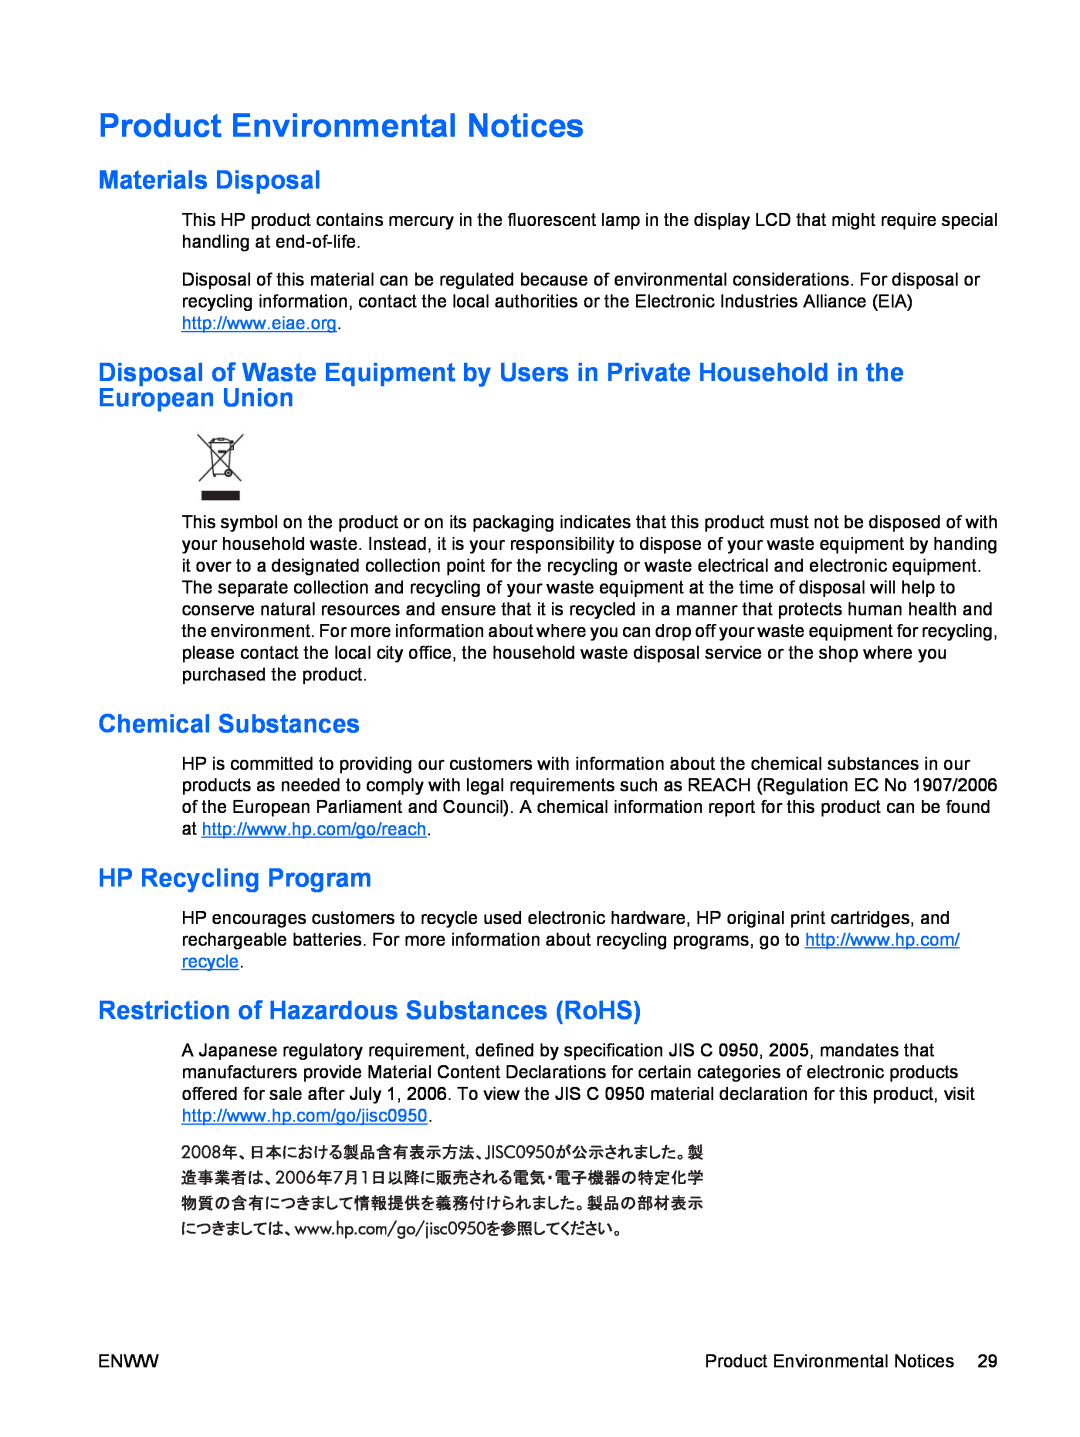 HP CQ1859E, CQ1859s manual Product Environmental Notices, Materials Disposal, Chemical Substances, HP Recycling Program 